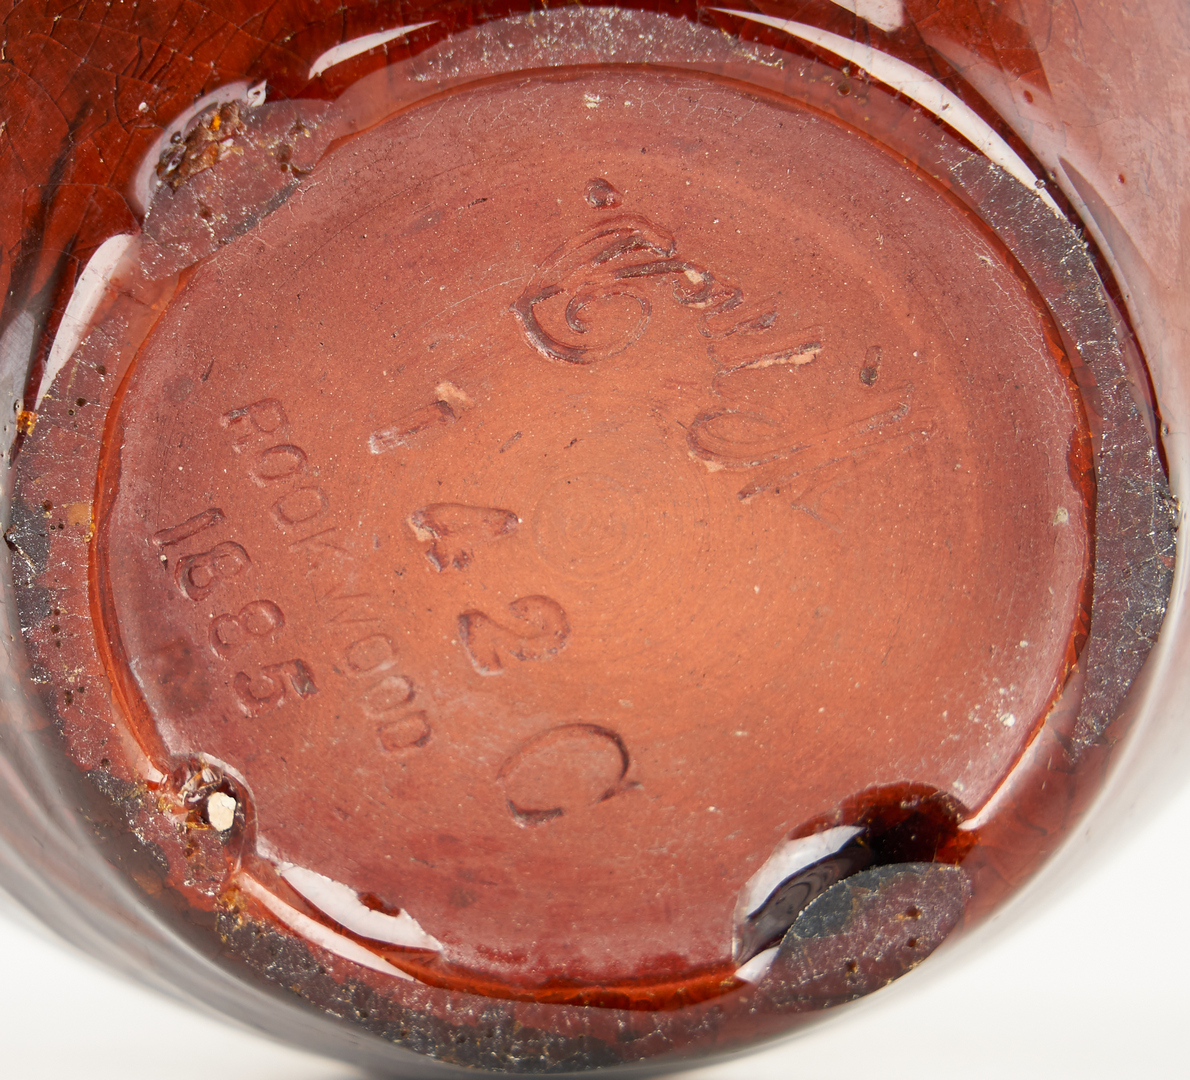 Lot 529: Signed Rookwood Art Pottery Ginger Jar, MacDonald